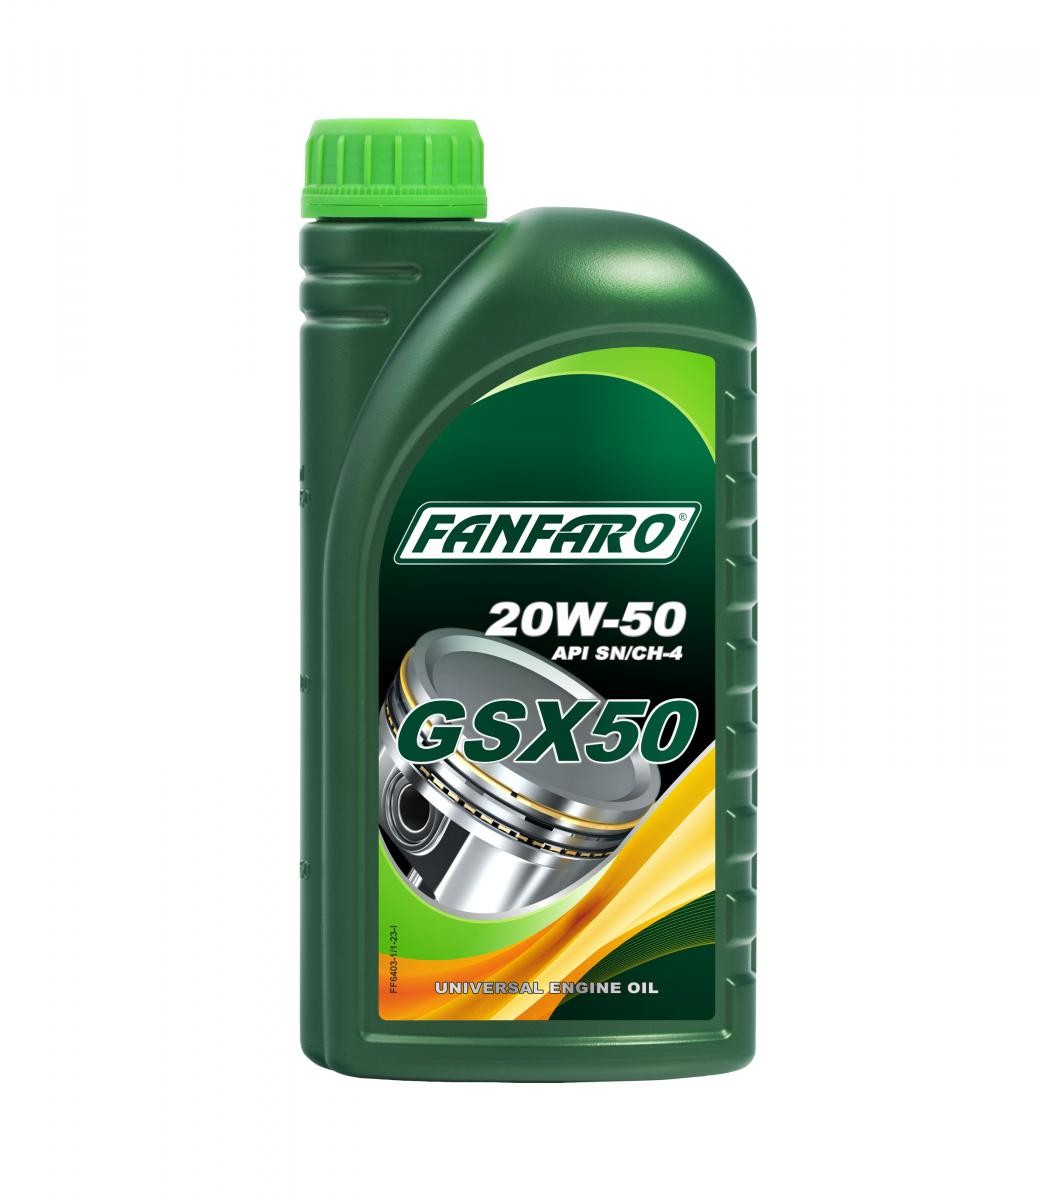 FANFARO Master Line, GSX 50 FF6403-1 Engine oil 20W-50, 1l, Mineral Oil